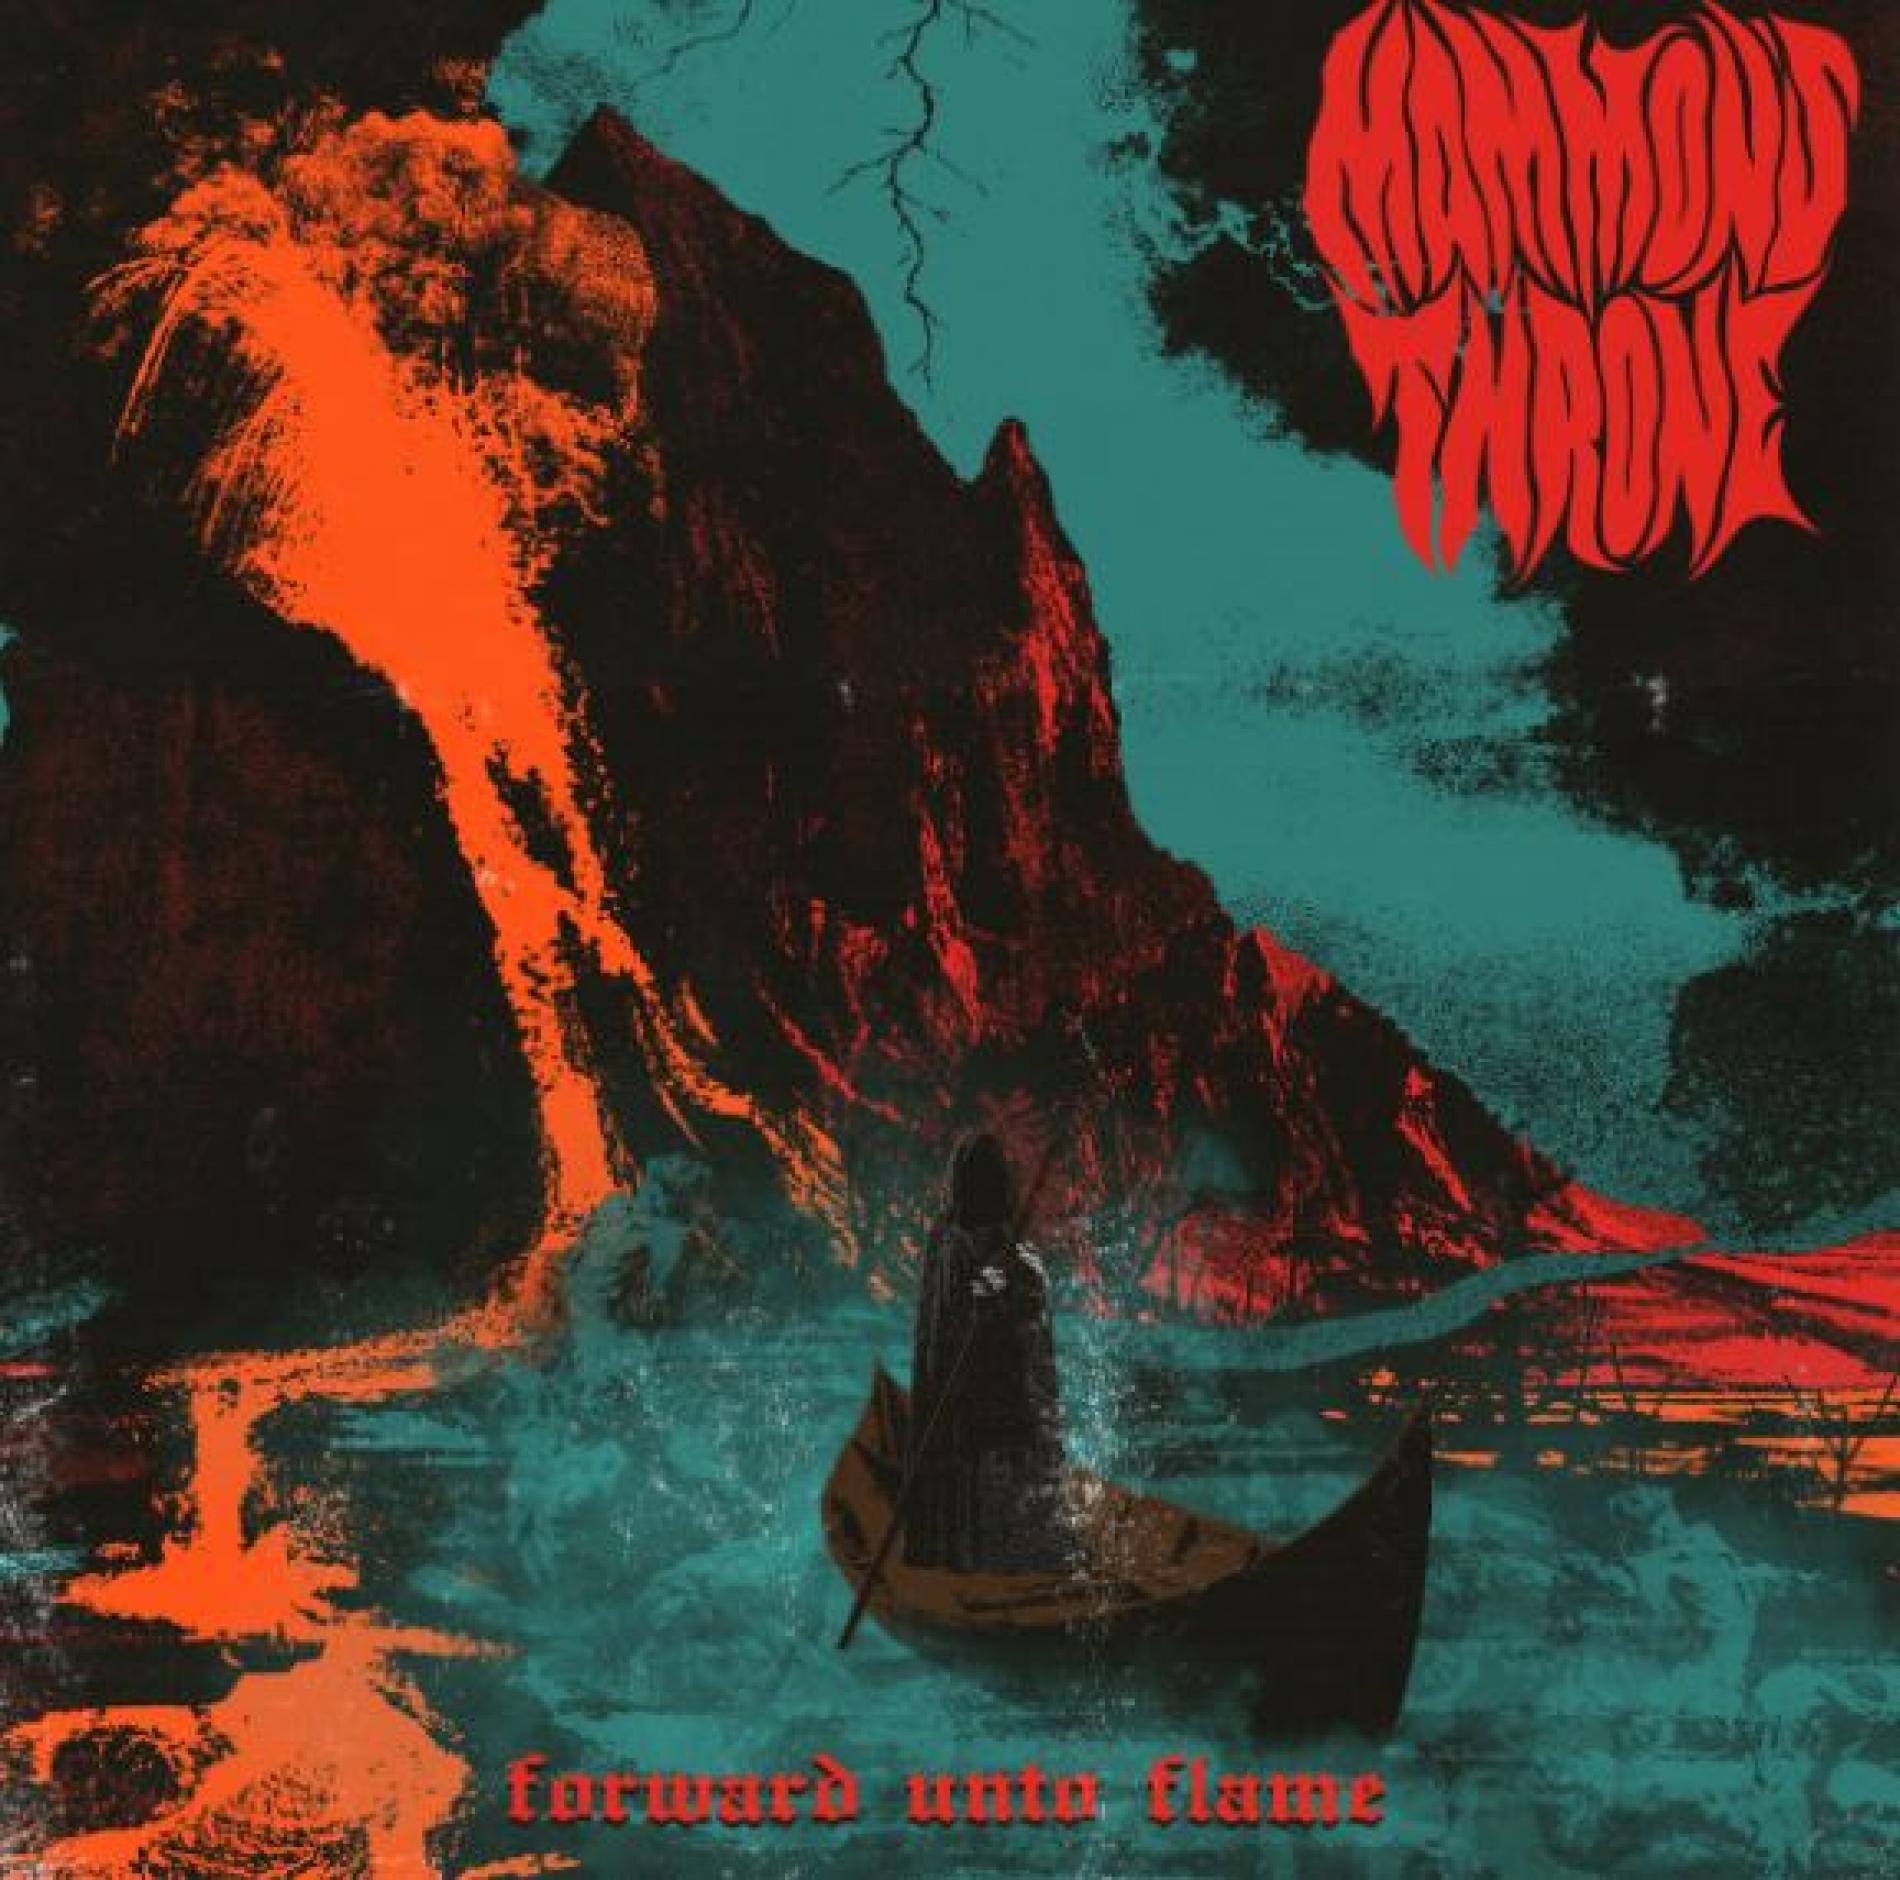 Mammon’s Throne – Forward Unto Flame